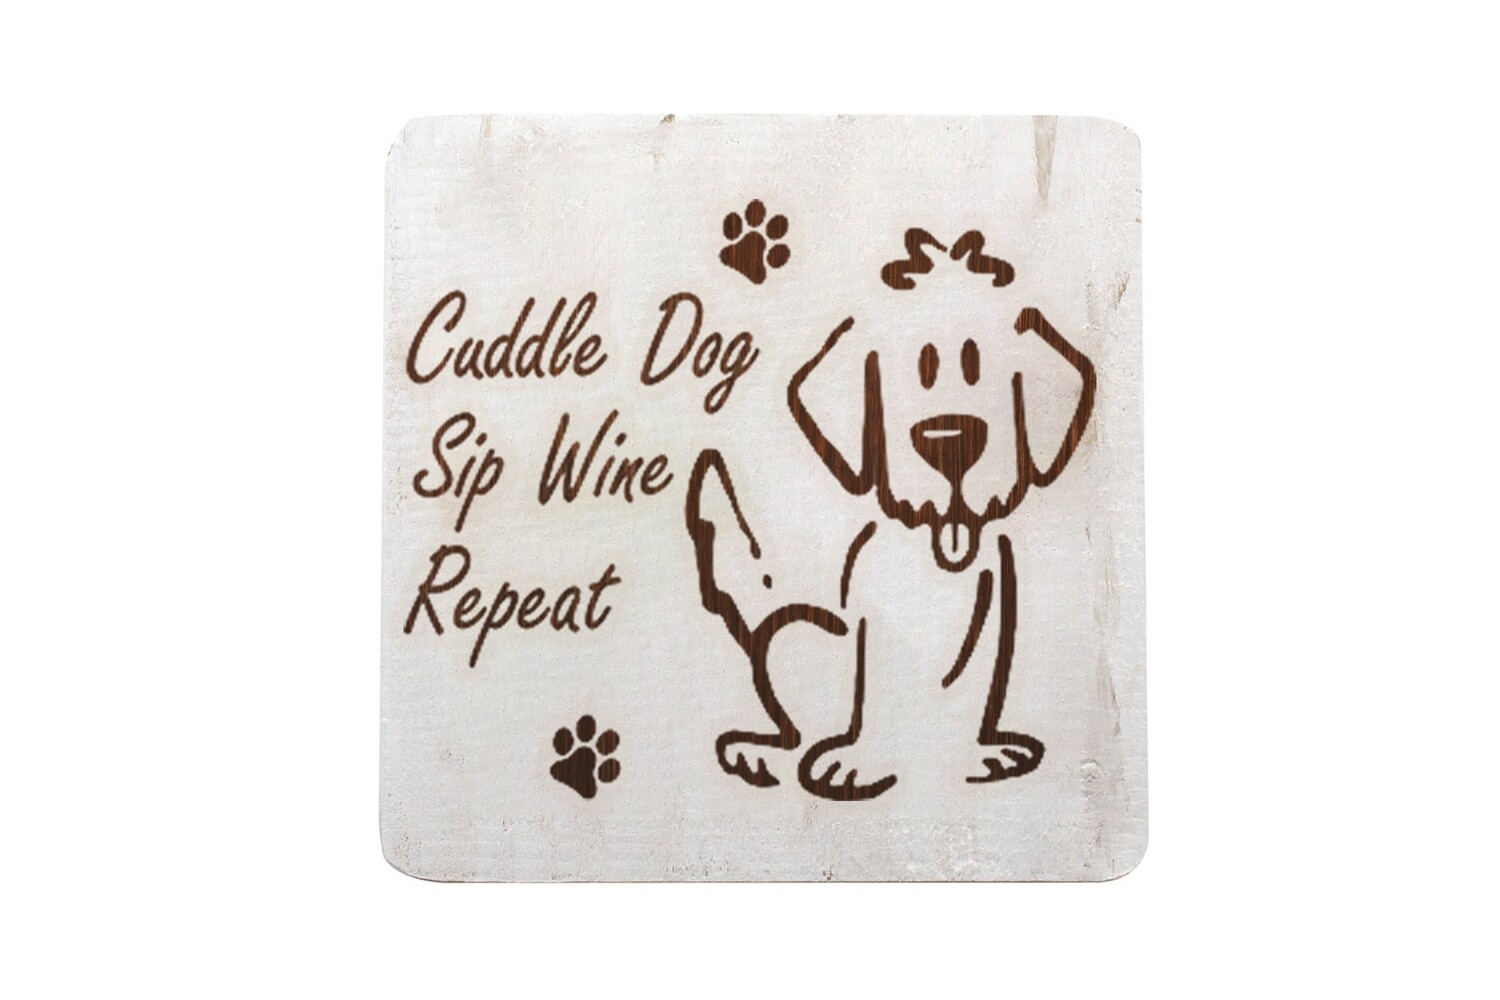 Cuddle Dog, Sip Wine, Repeat on Hand-Painted Wood Coaster Set